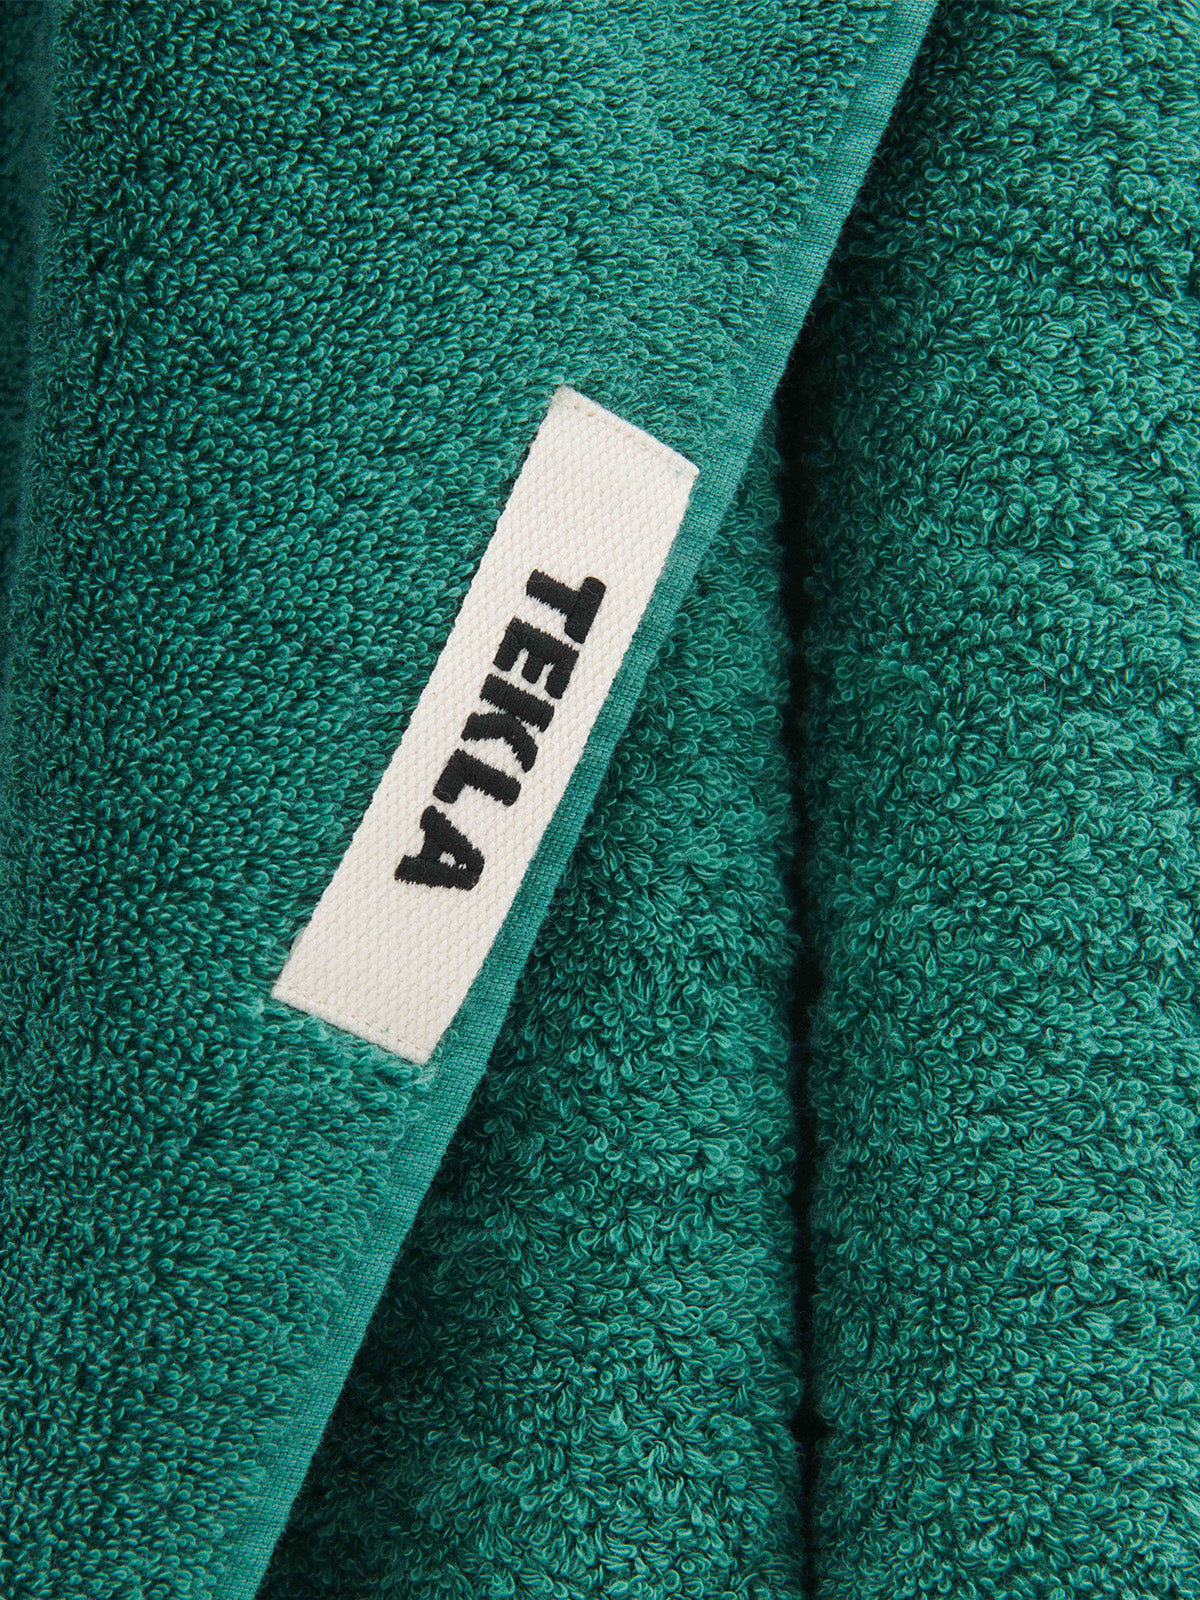 Guest Towel in Teal Green